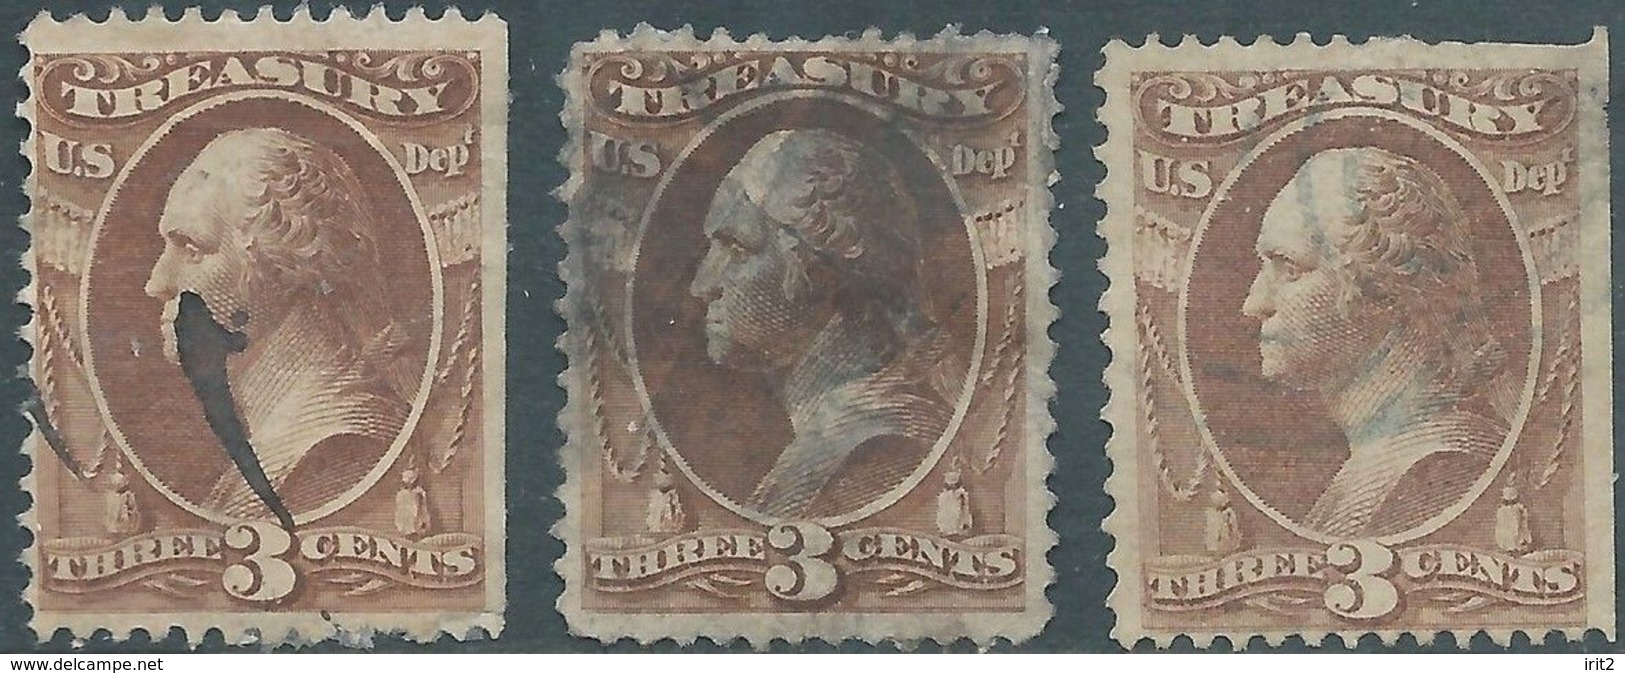 Stati Uniti D'america,United States,U.S.A,1873 Revenue Stamps 3c MINISTRY OF TREASURY,Used - Officials